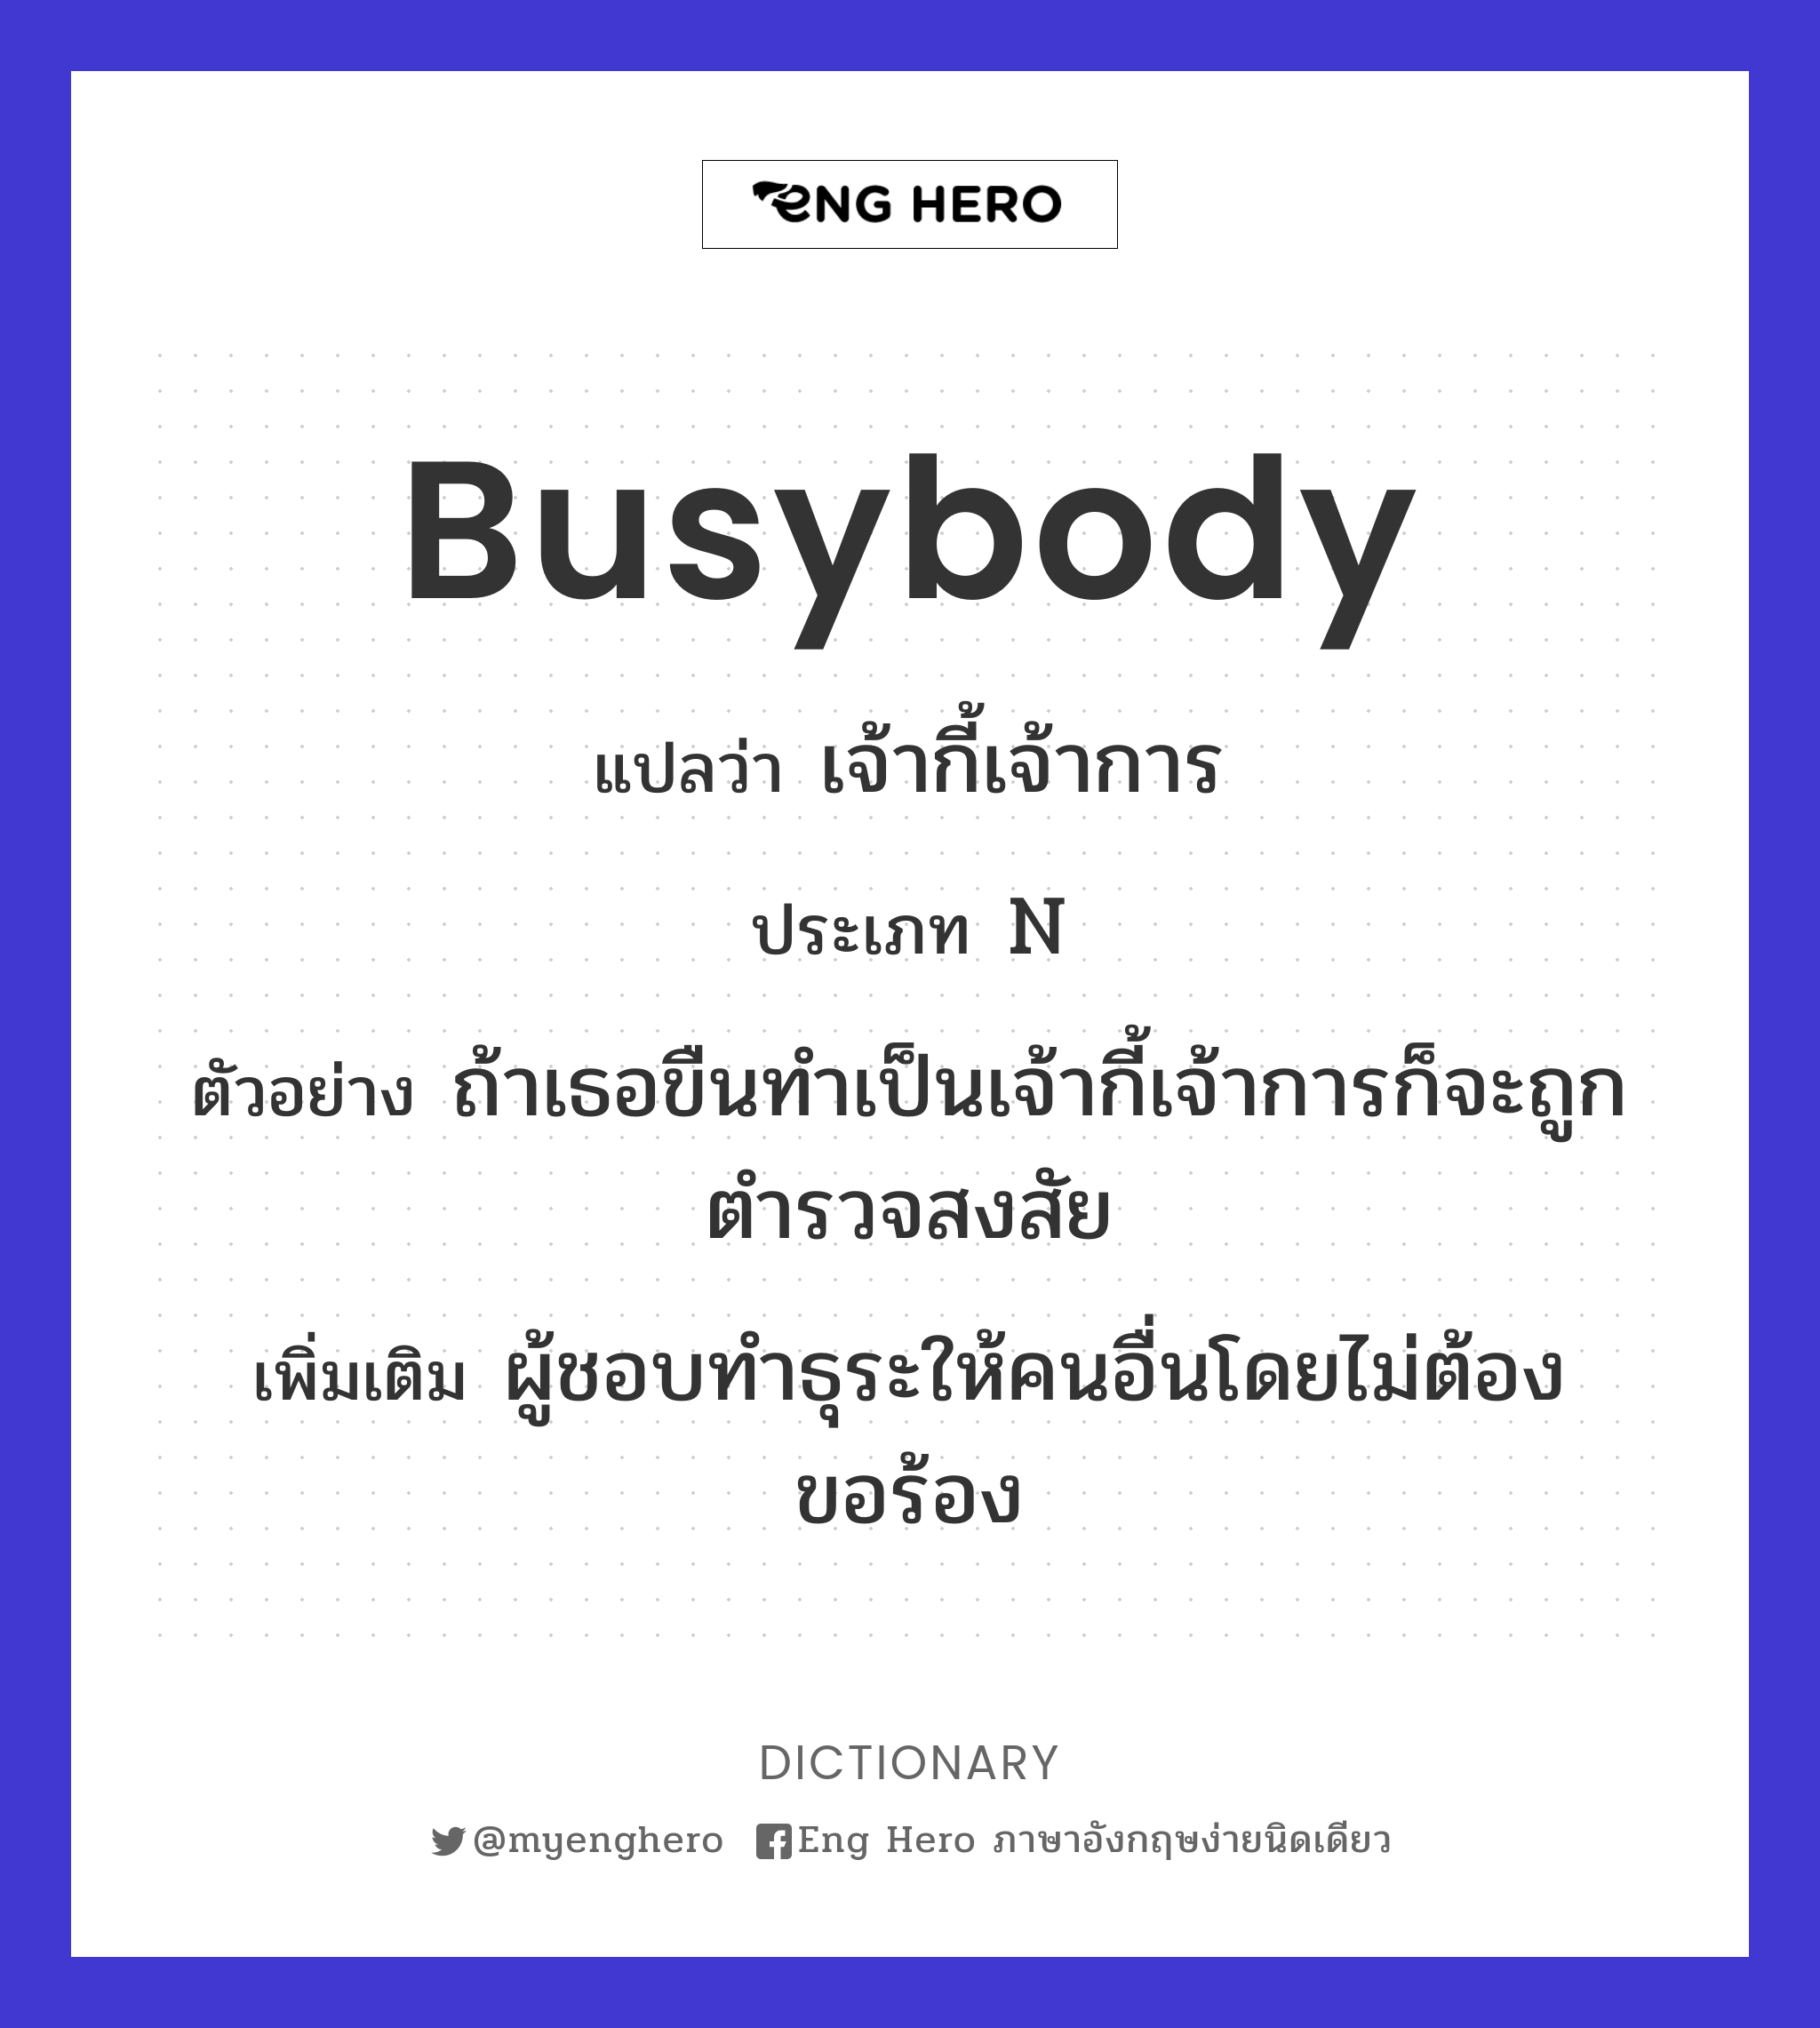 busybody